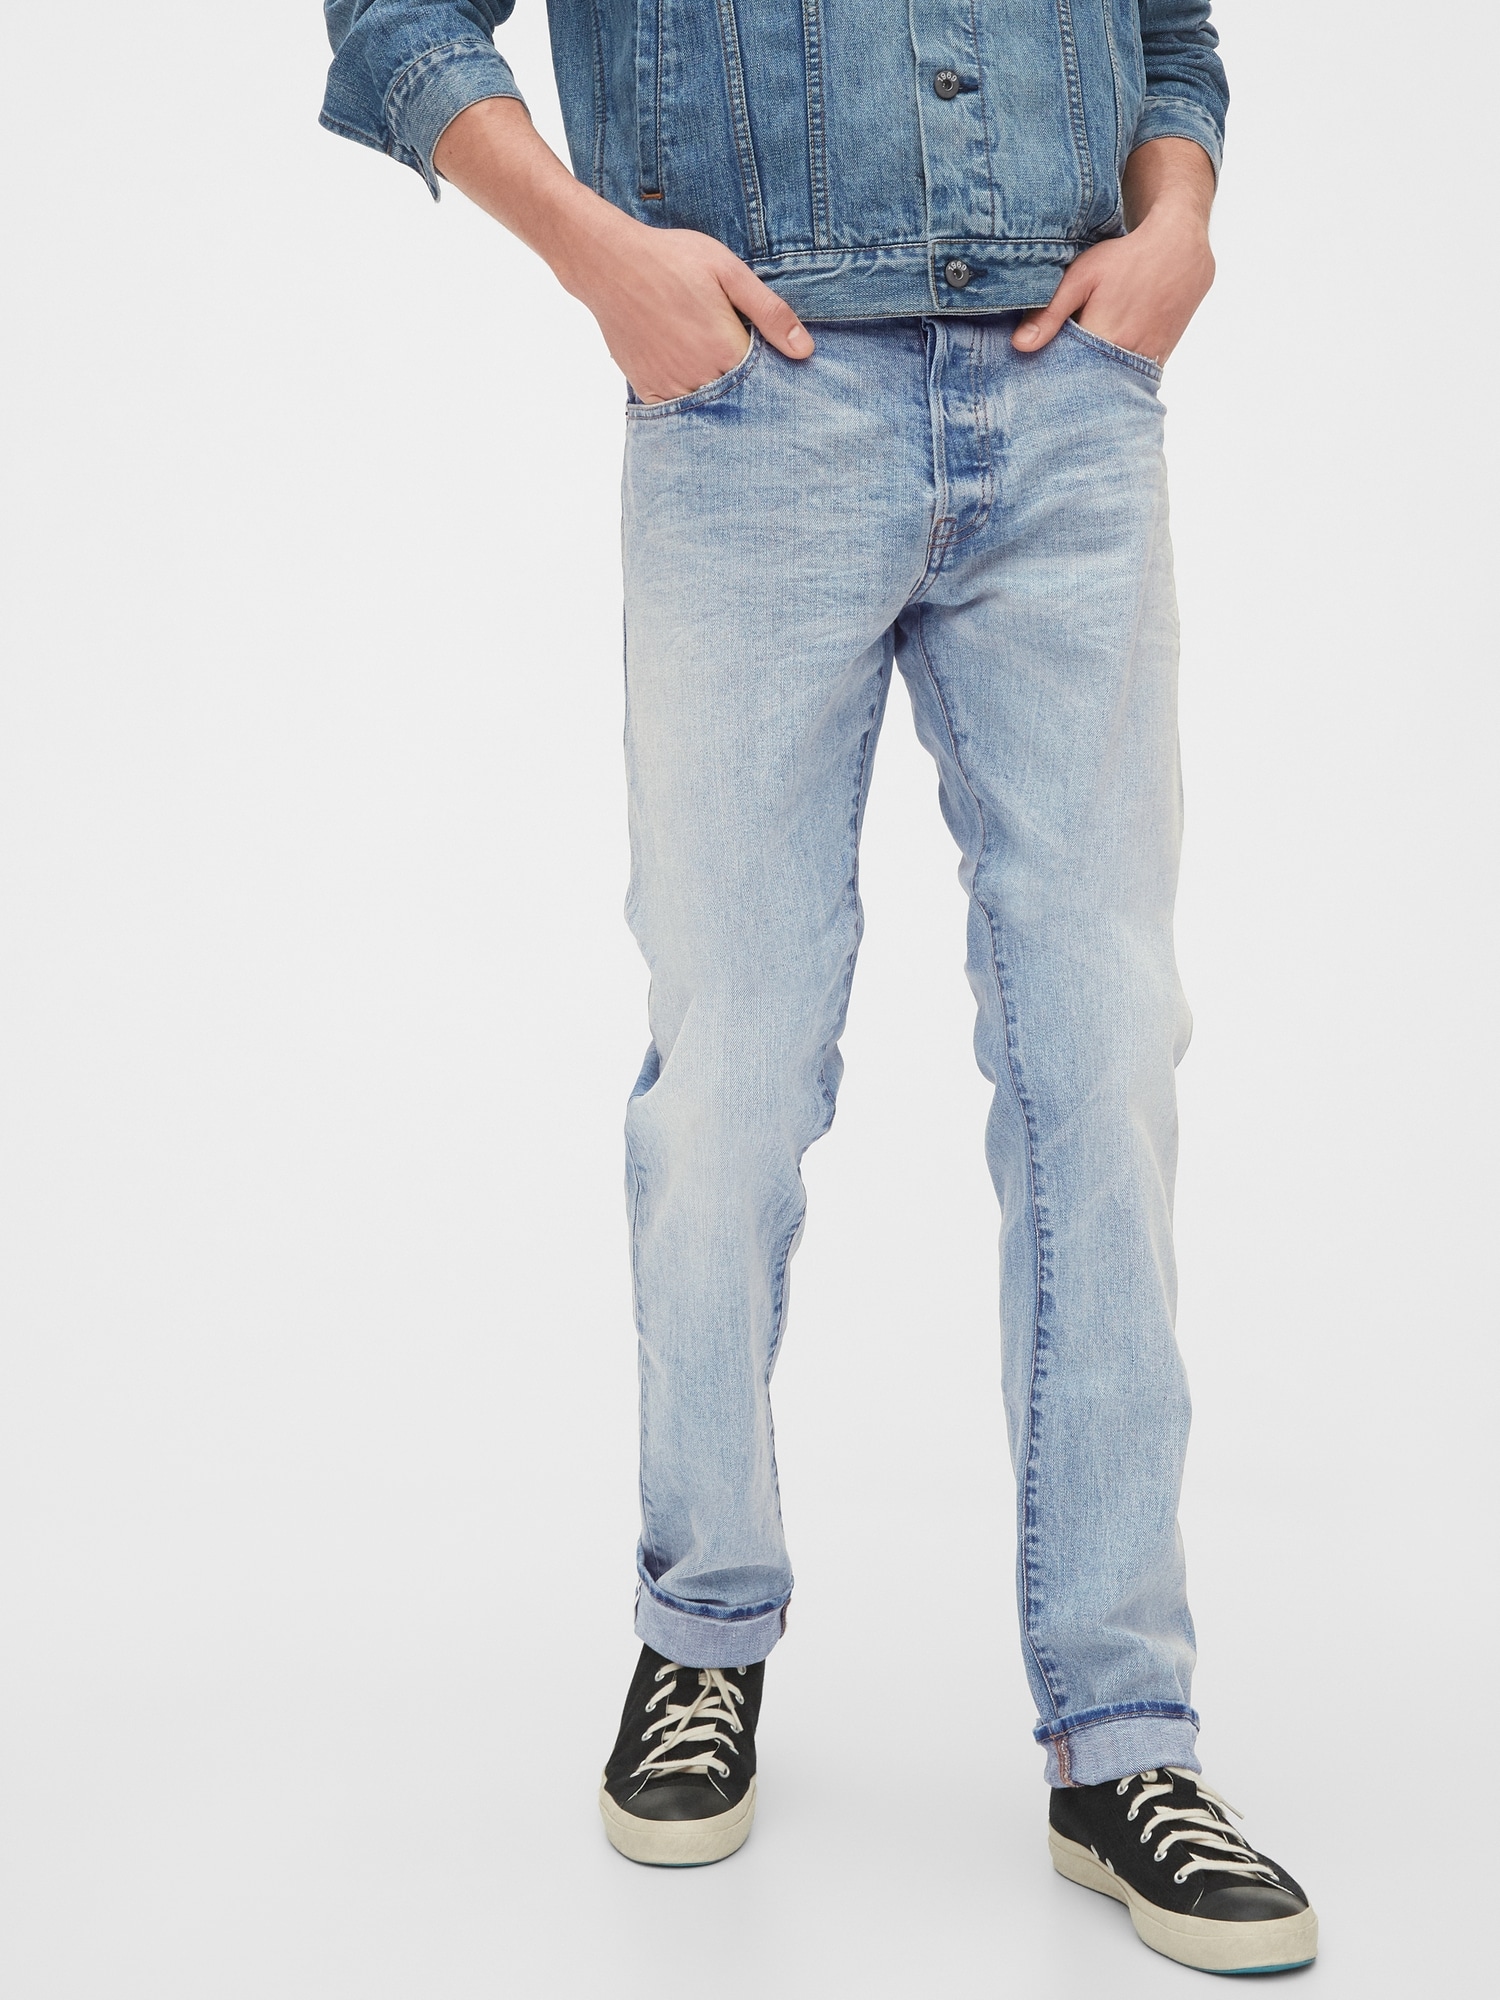 gap 1969 selvedge jeans